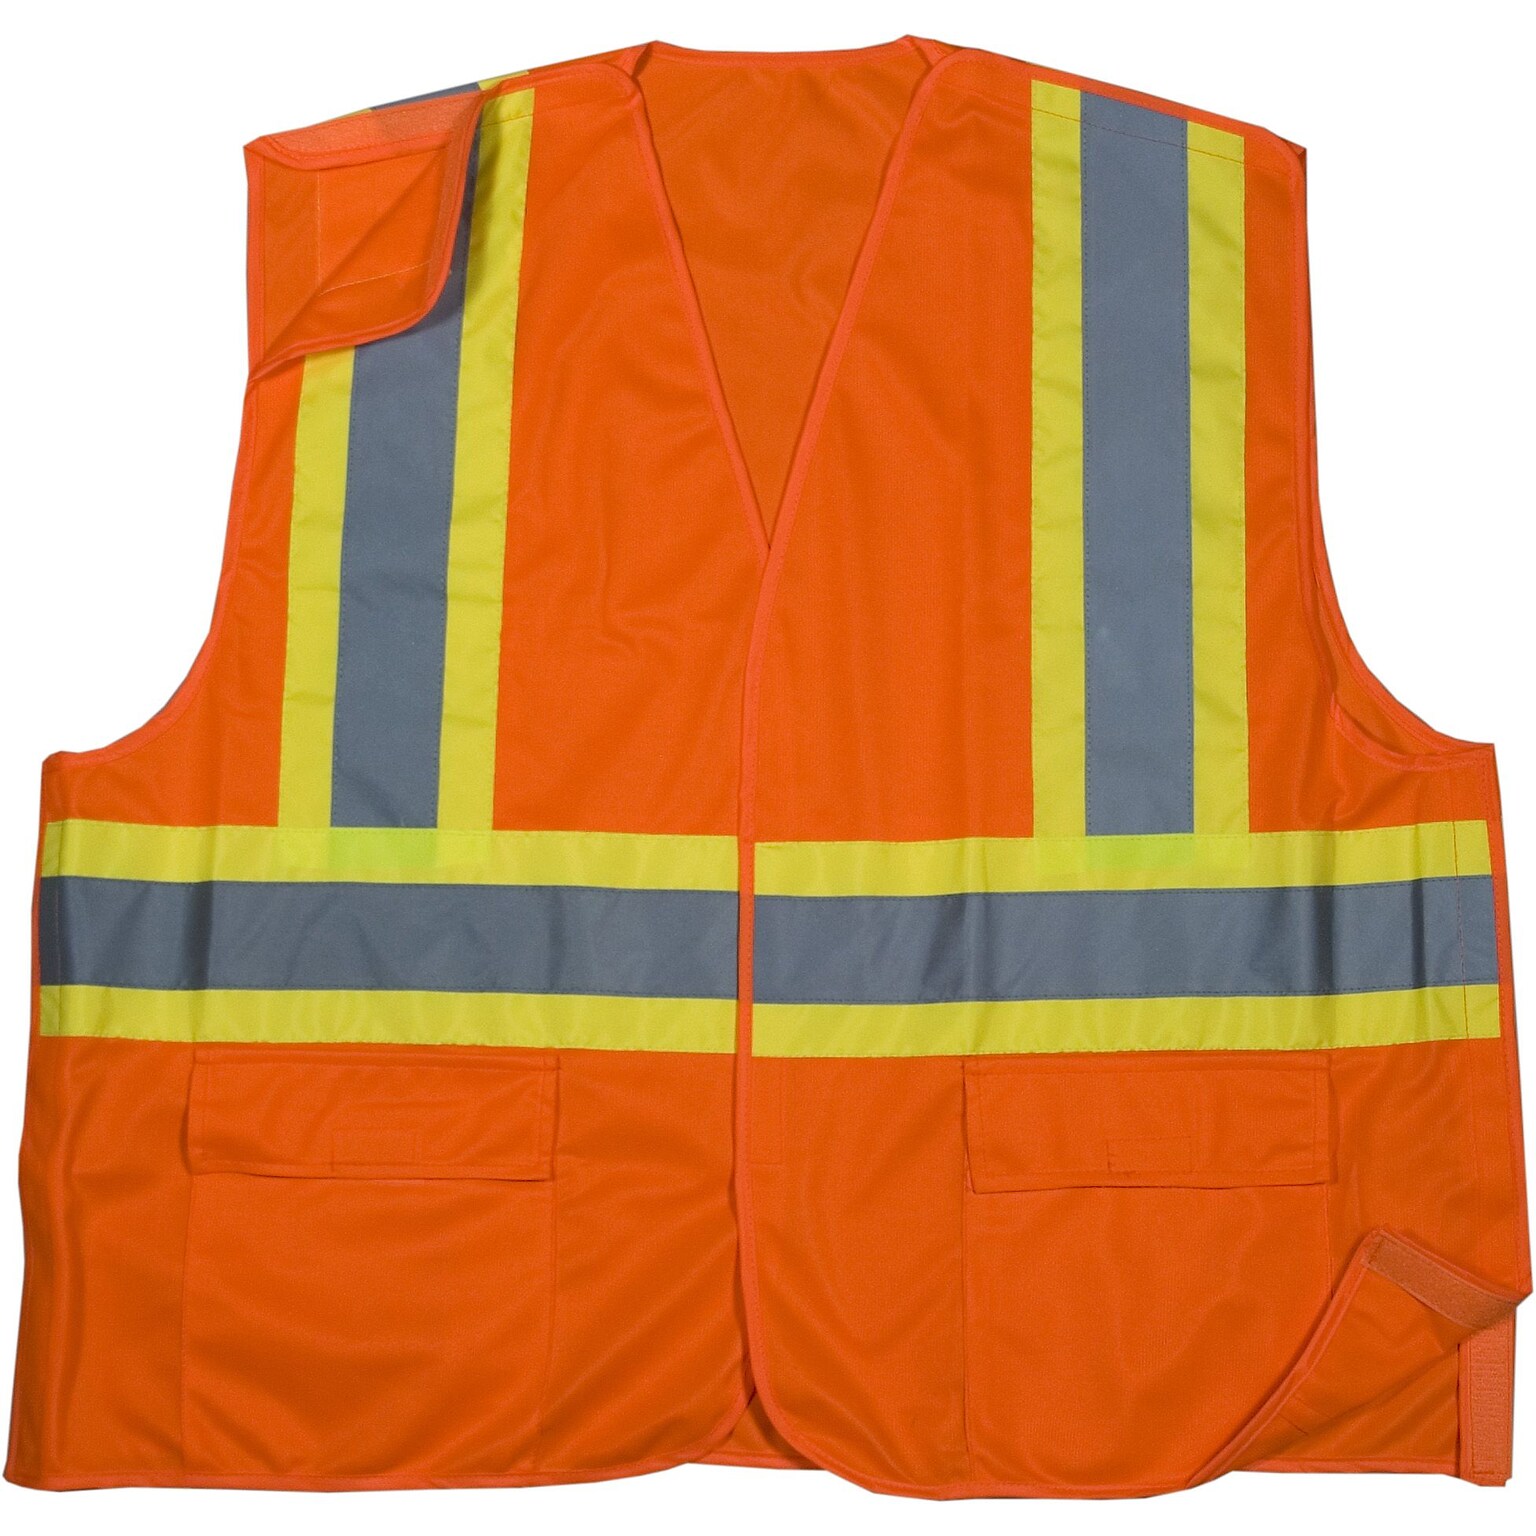 Mutual Industries MiViz High Visibility Sleeveless Safety Vest, ANSI Class R3, Orange, 2XL (16389-0-5)